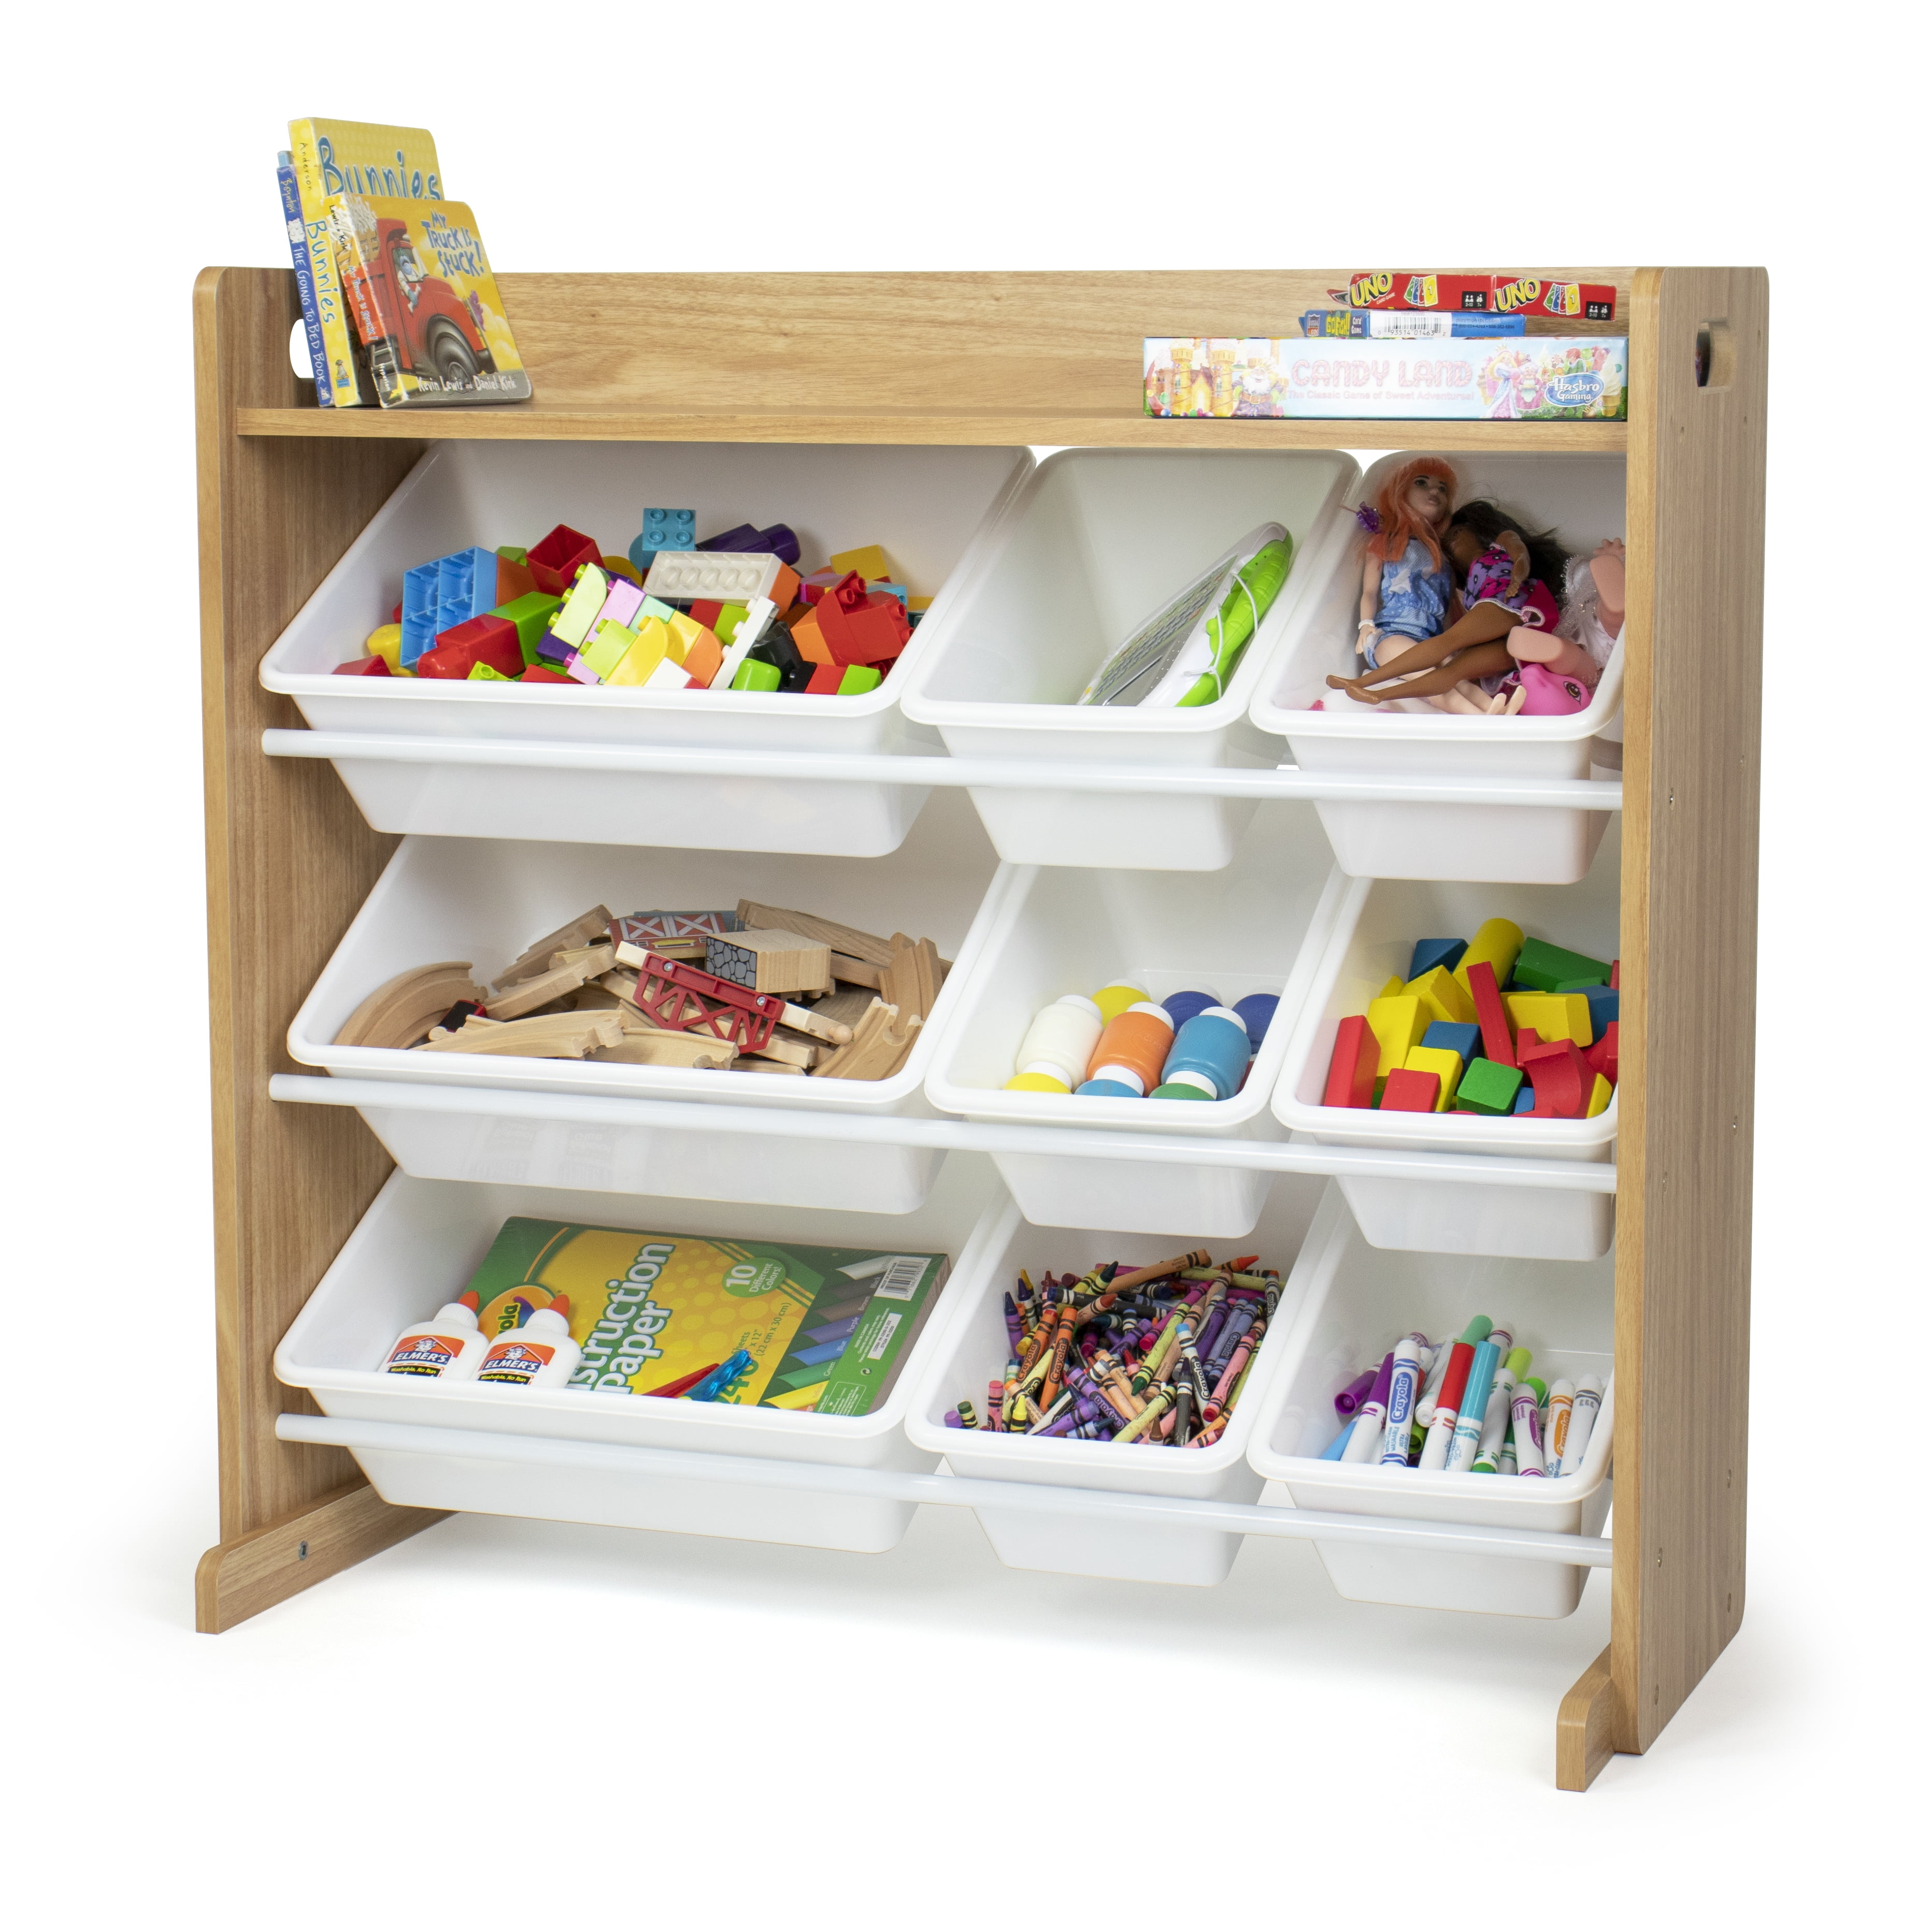 Dropship Kids Toy Storage Organizer With 9 Bins, Multi-functional